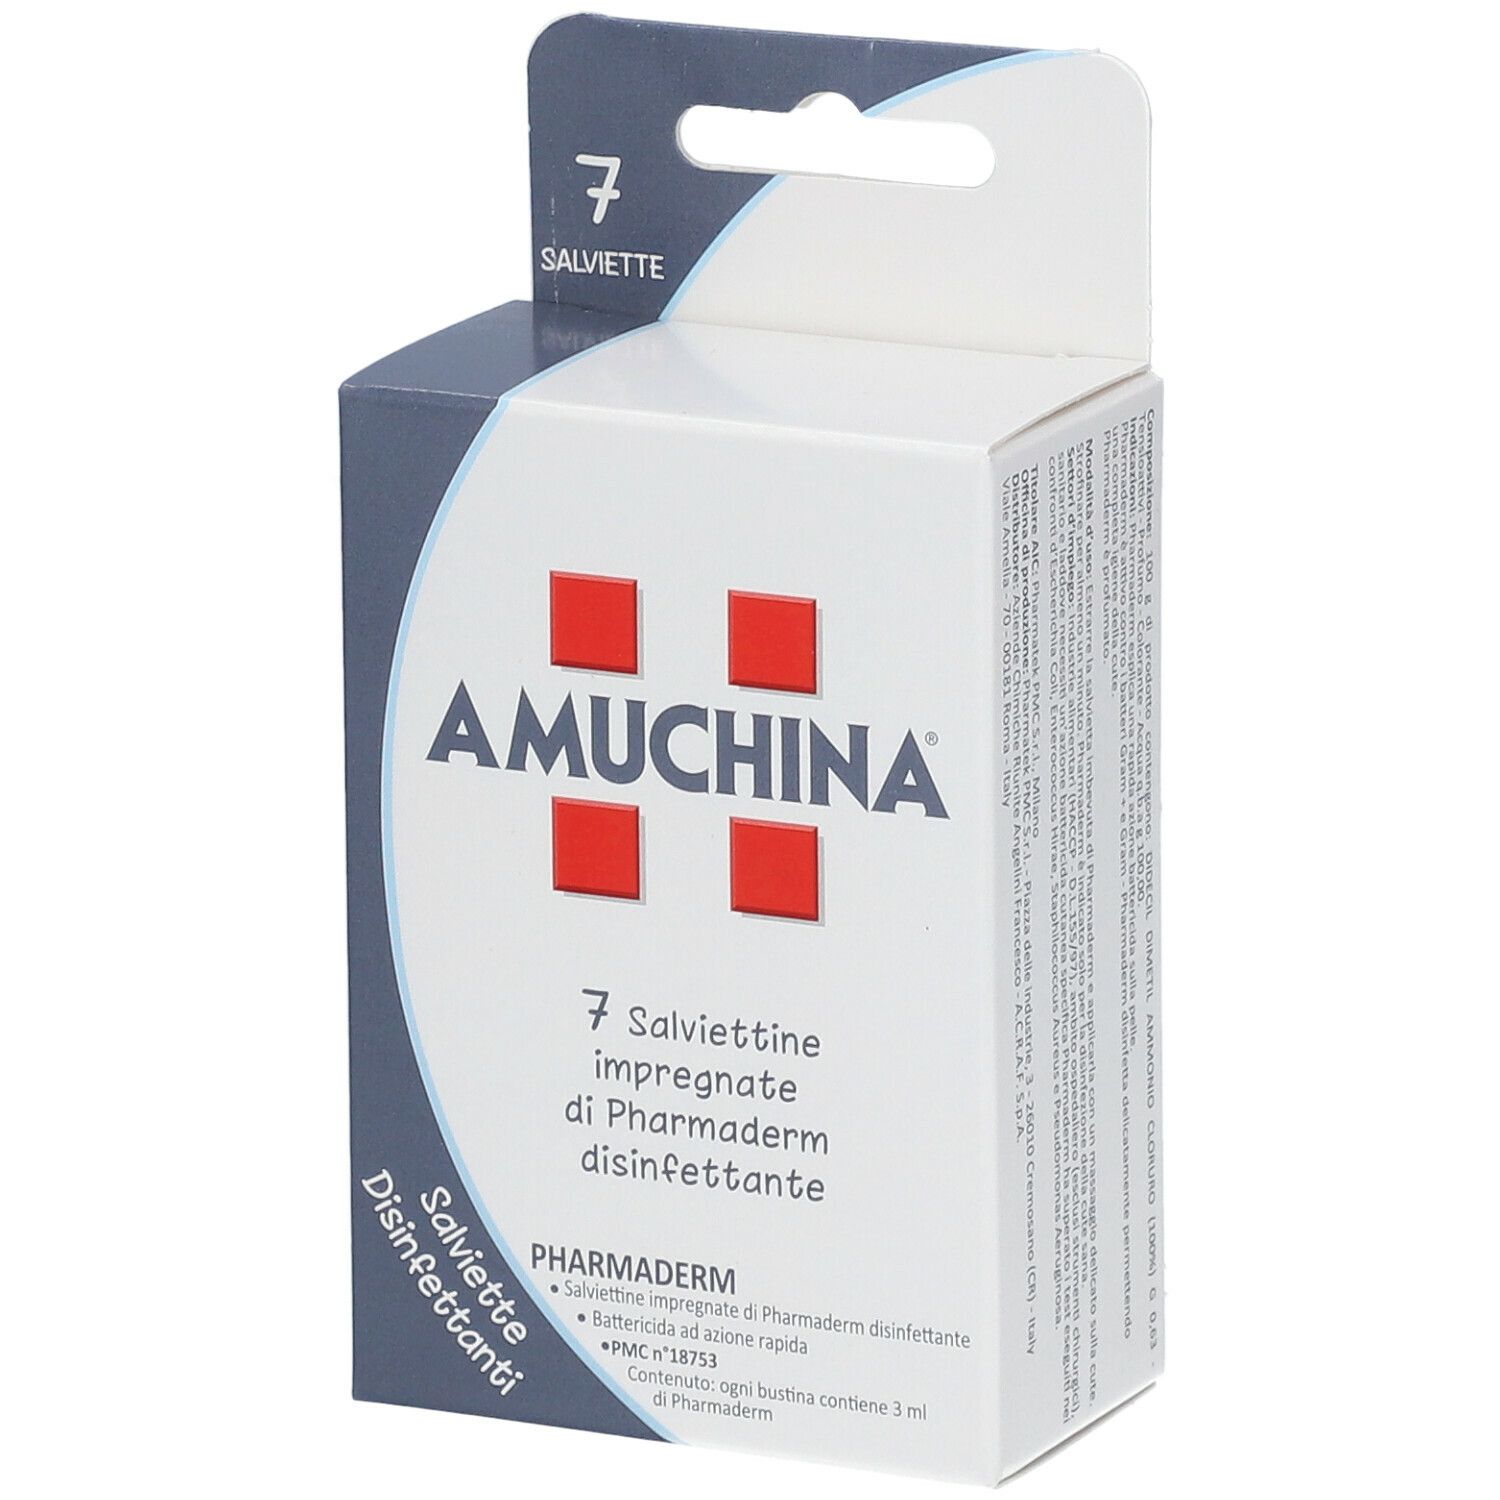 Amuchina® Salviette Disinfettanti